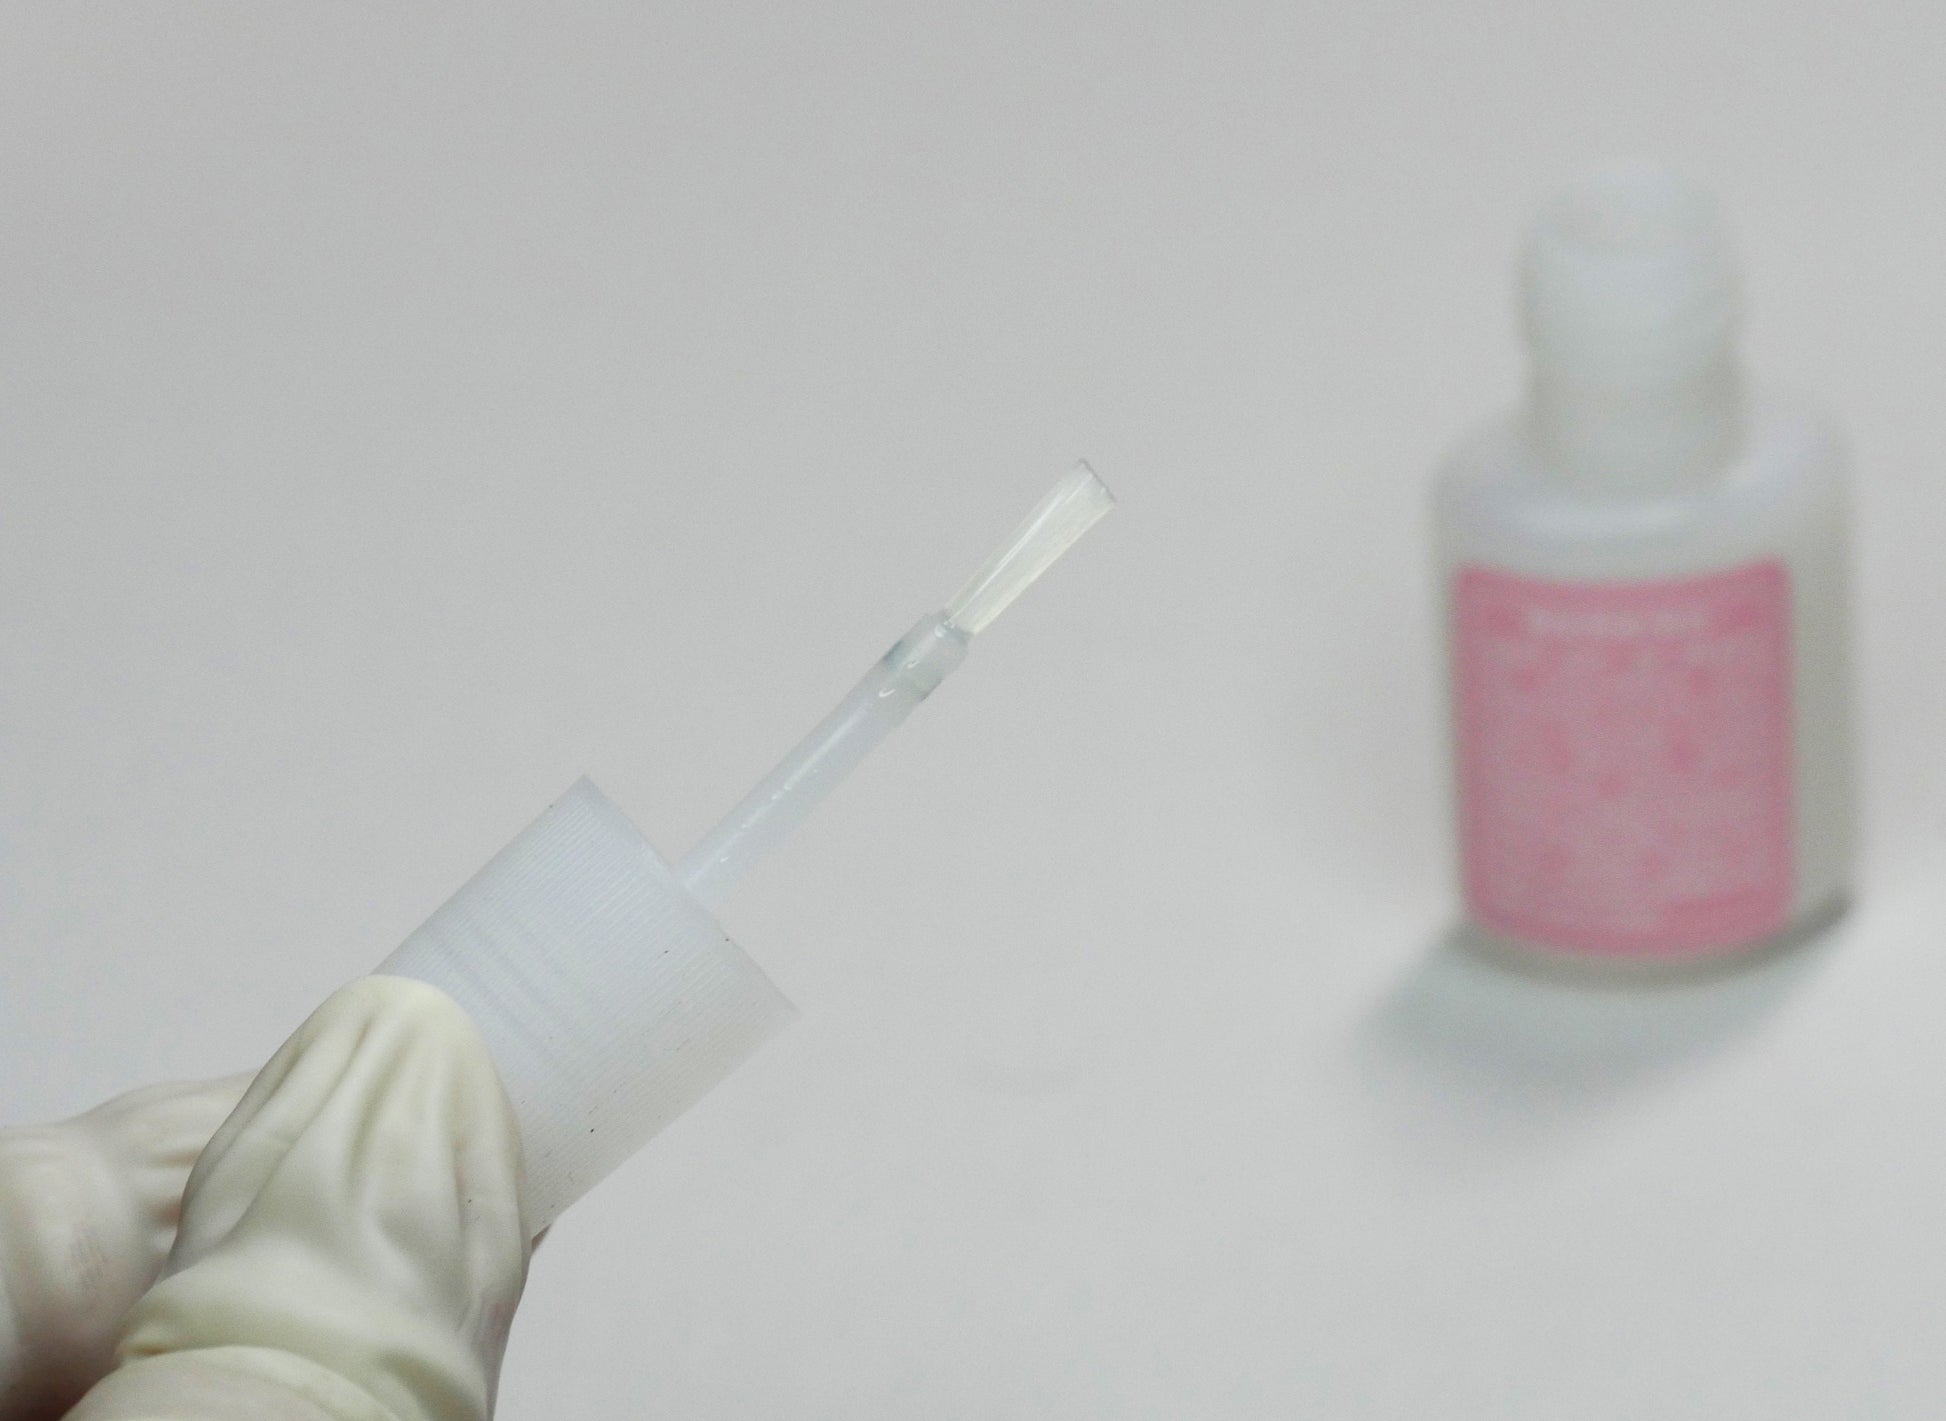 Fast Dry 10g Nail Glue with Brush Nail Bond Acrylic Glue Adhesive, Perfect for False Acrylic Nail Art, Glitter,Gems, Nail Tip Applications